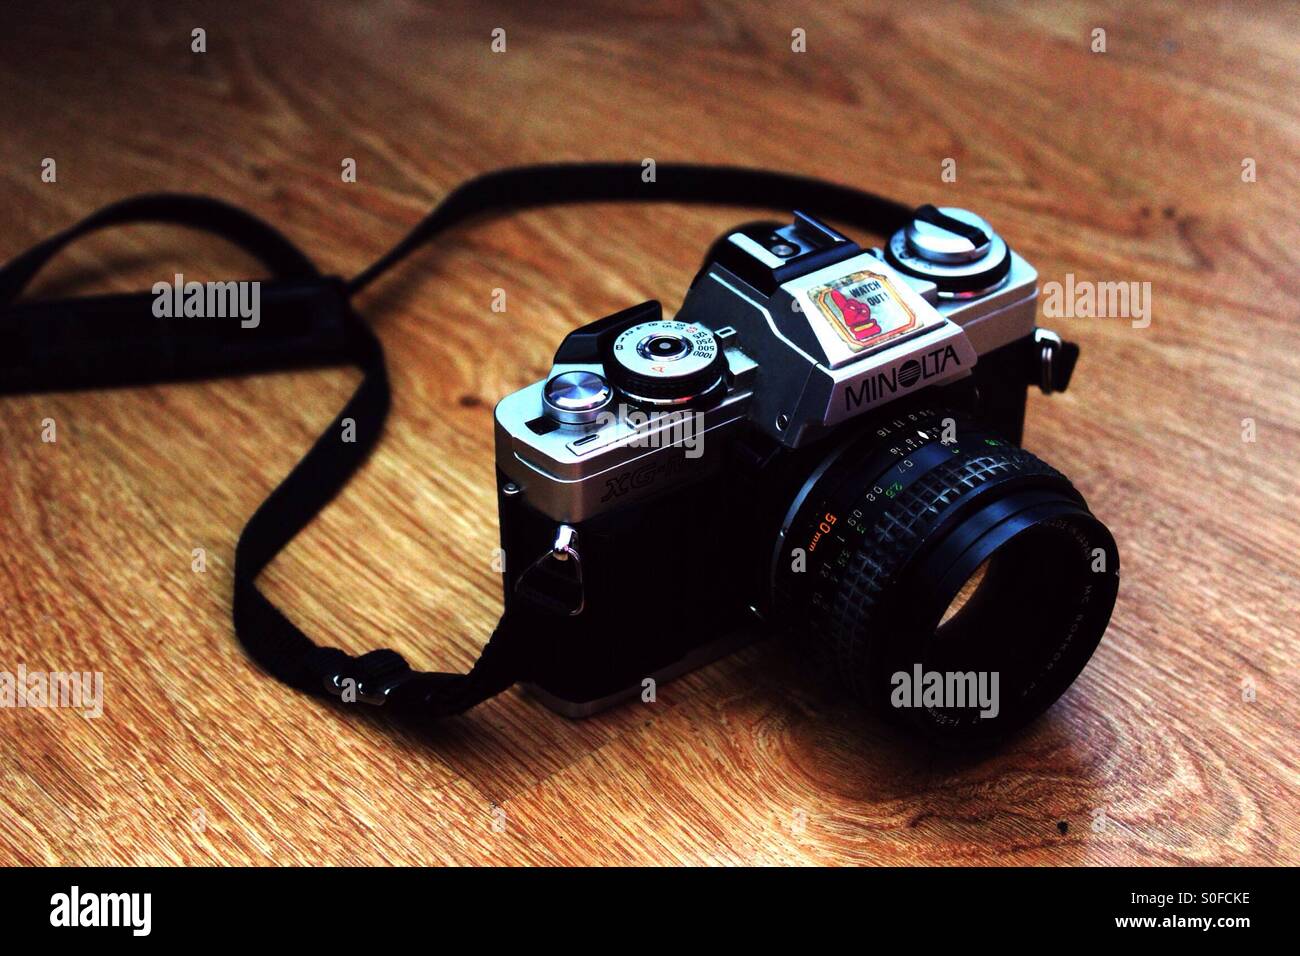 Old minolta camera Stock Photo